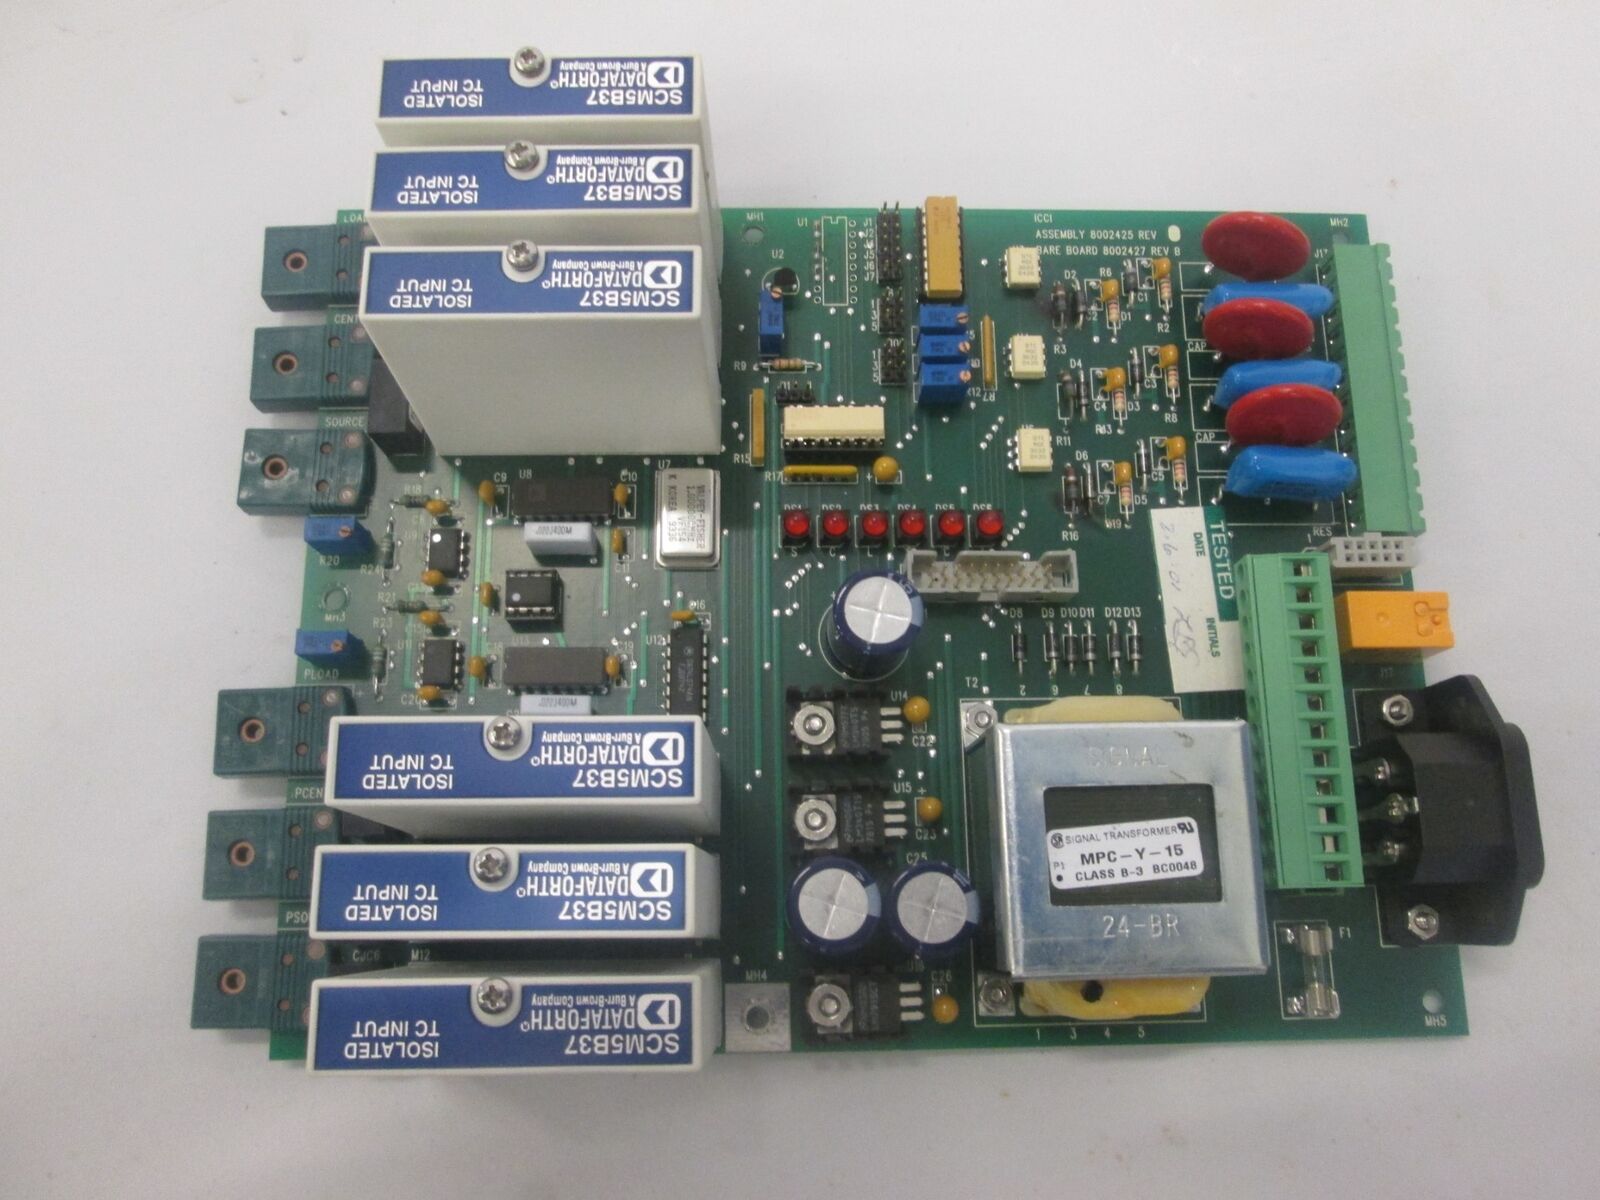 ICCI, 8002425, PCB Assy w/ 6 SCM5B37 Thermocouple Modules, Used